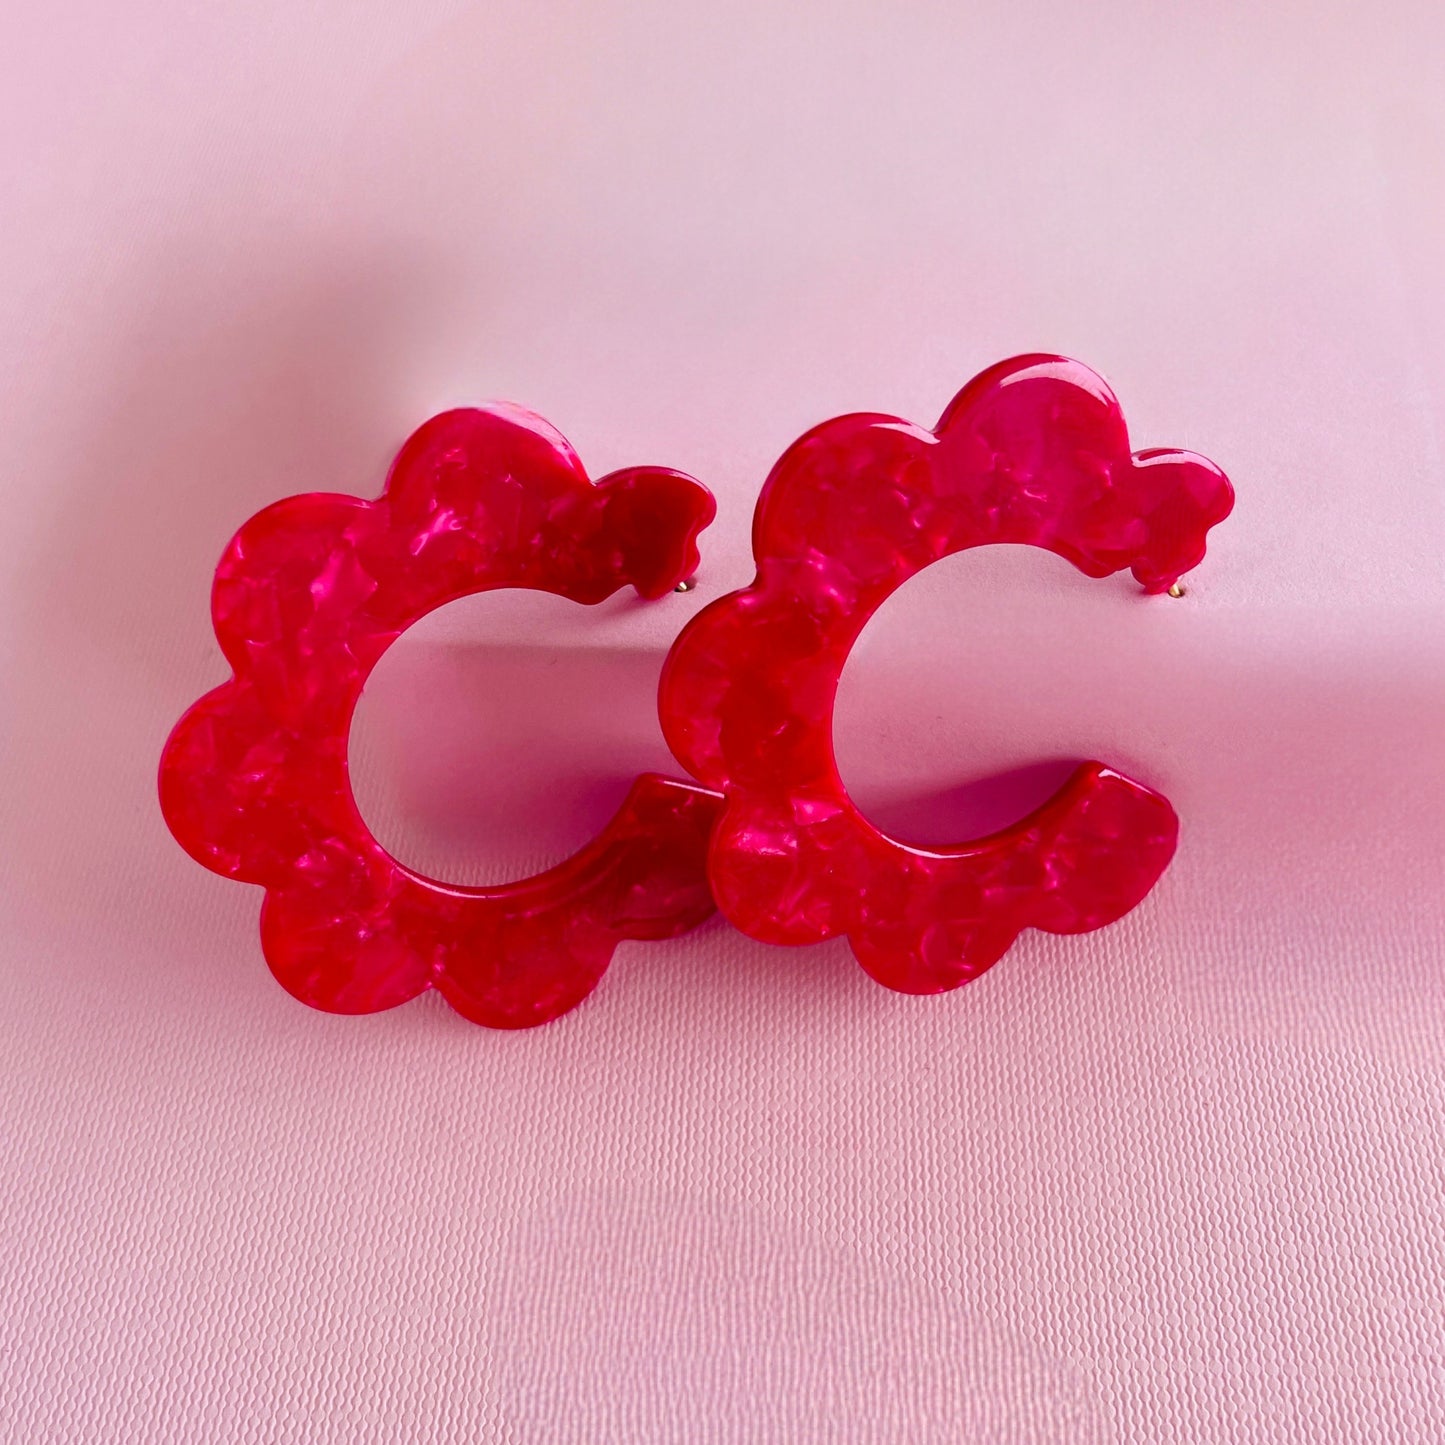 Red Marble Flower Shaped Earrings